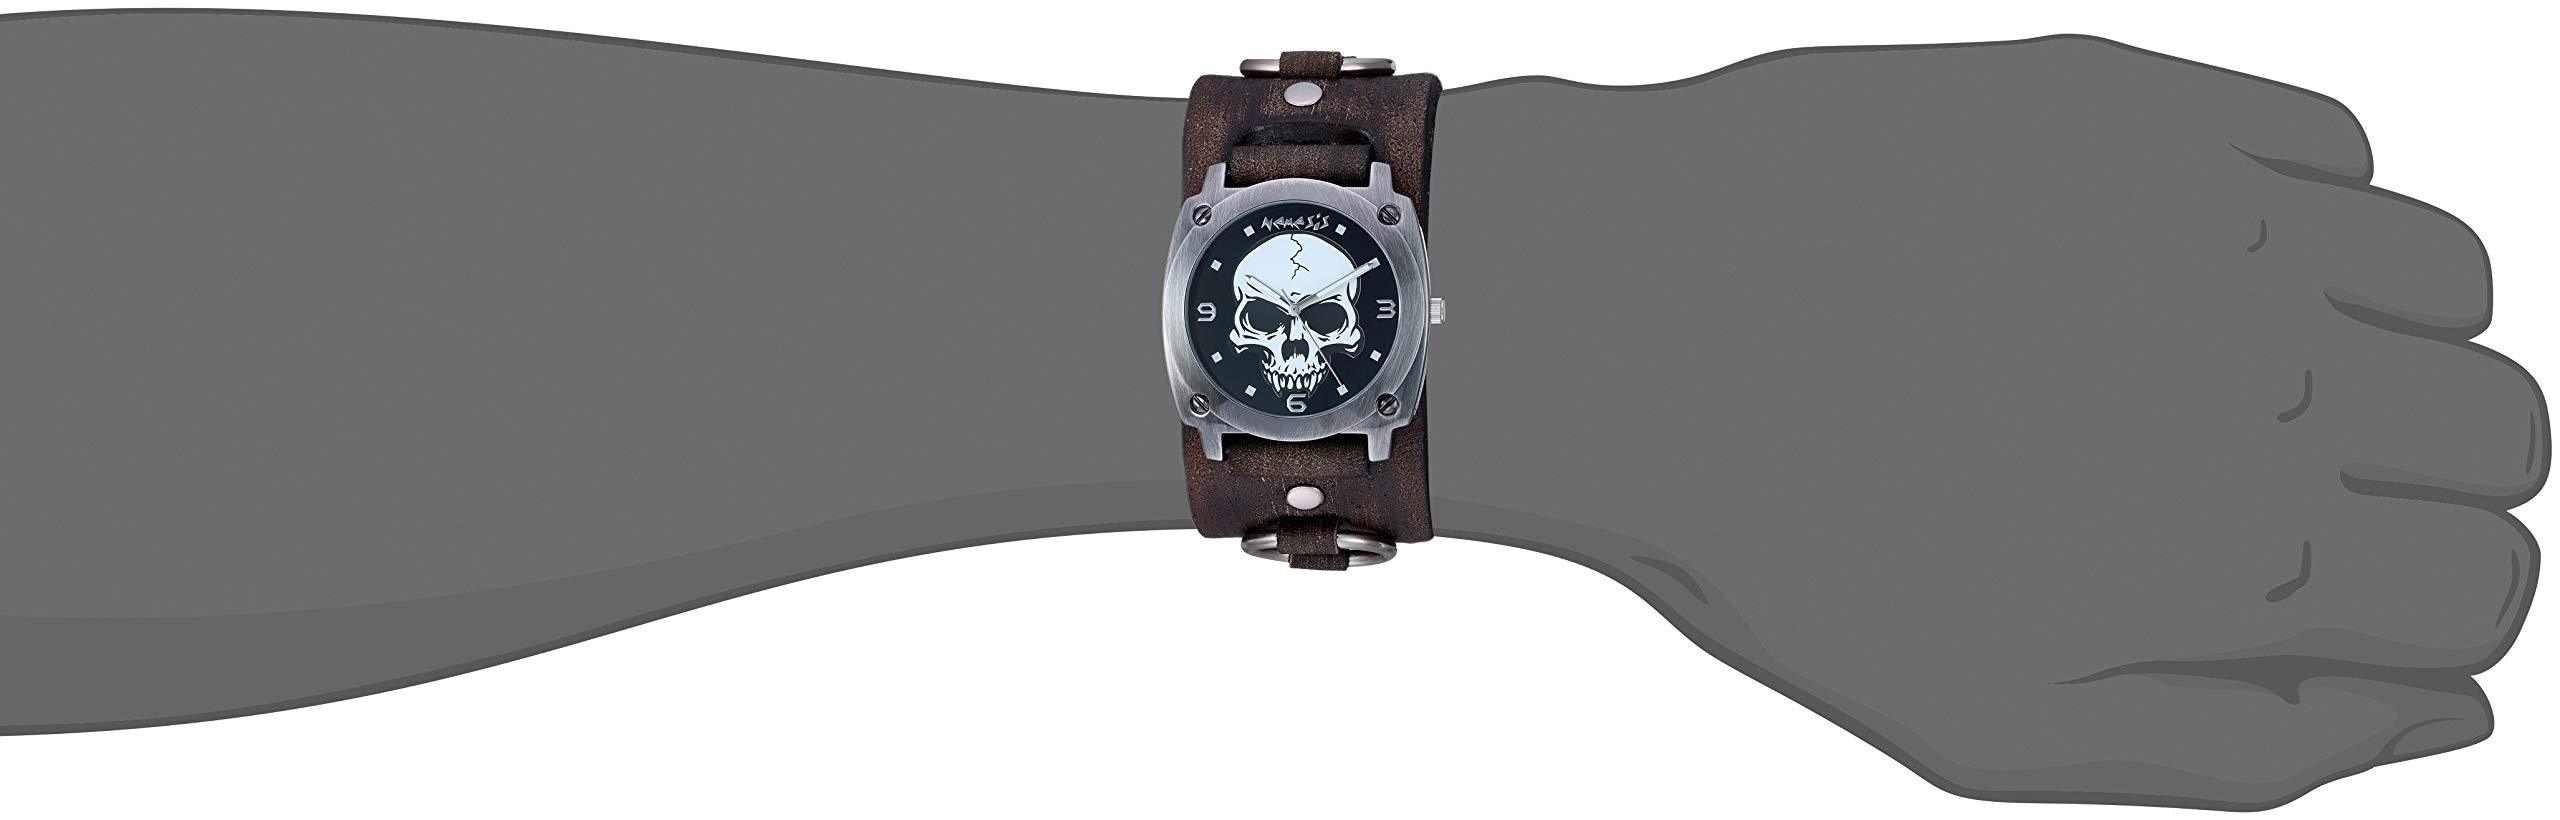 Nemesis Unisex KDFRB926K Heavy Skull Analog Display Black Watch